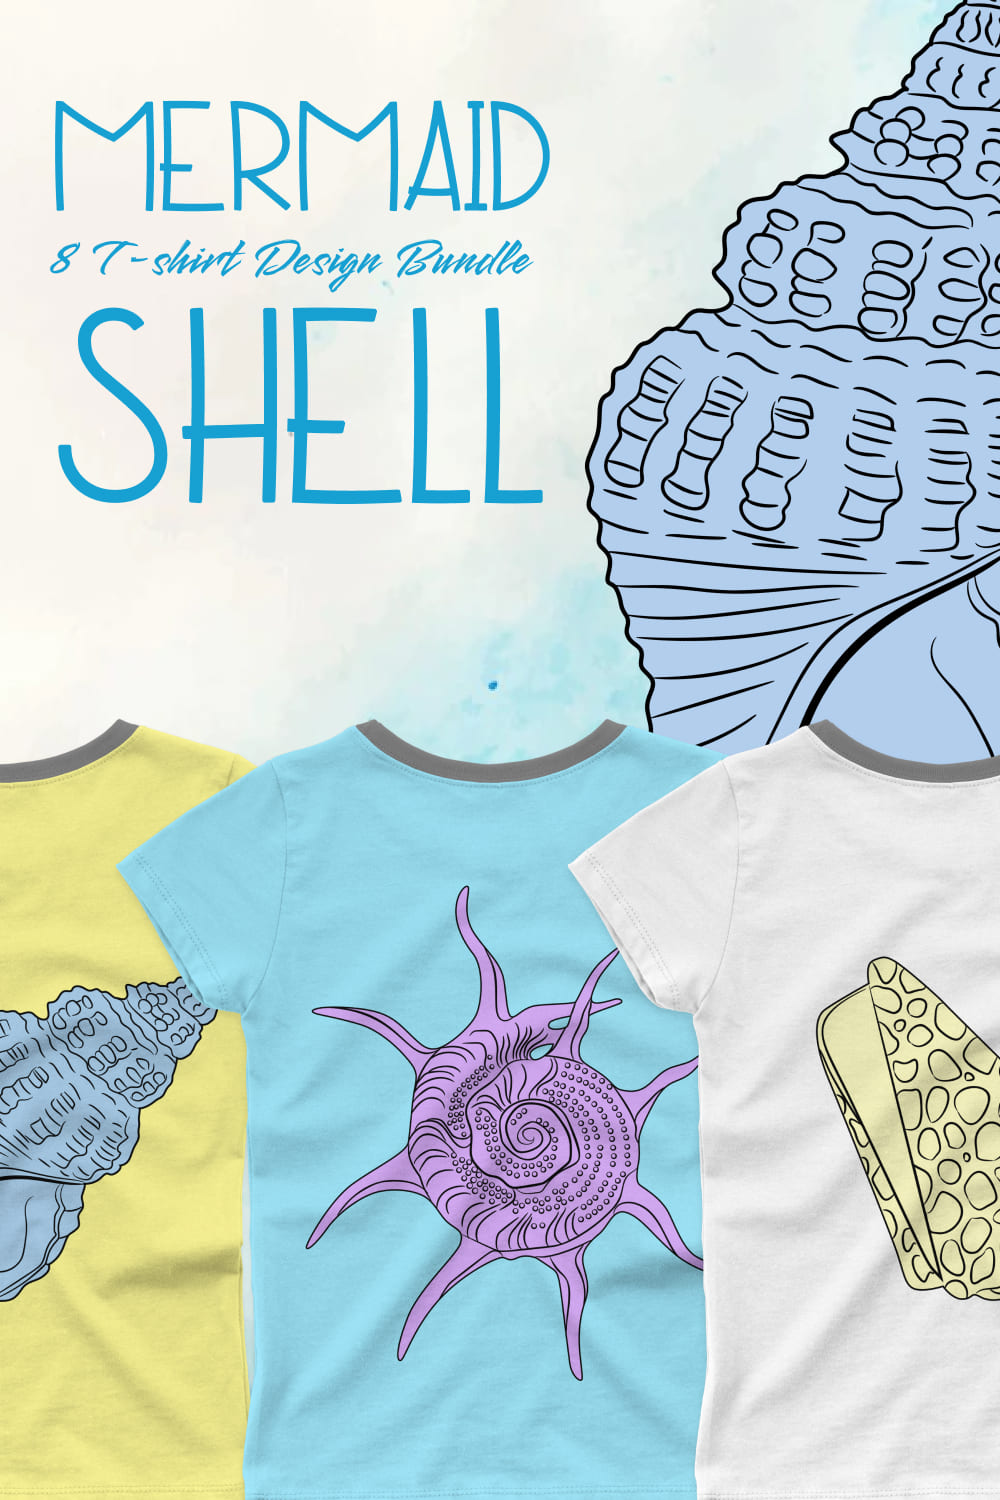 Mermaid shell images of pinterest.